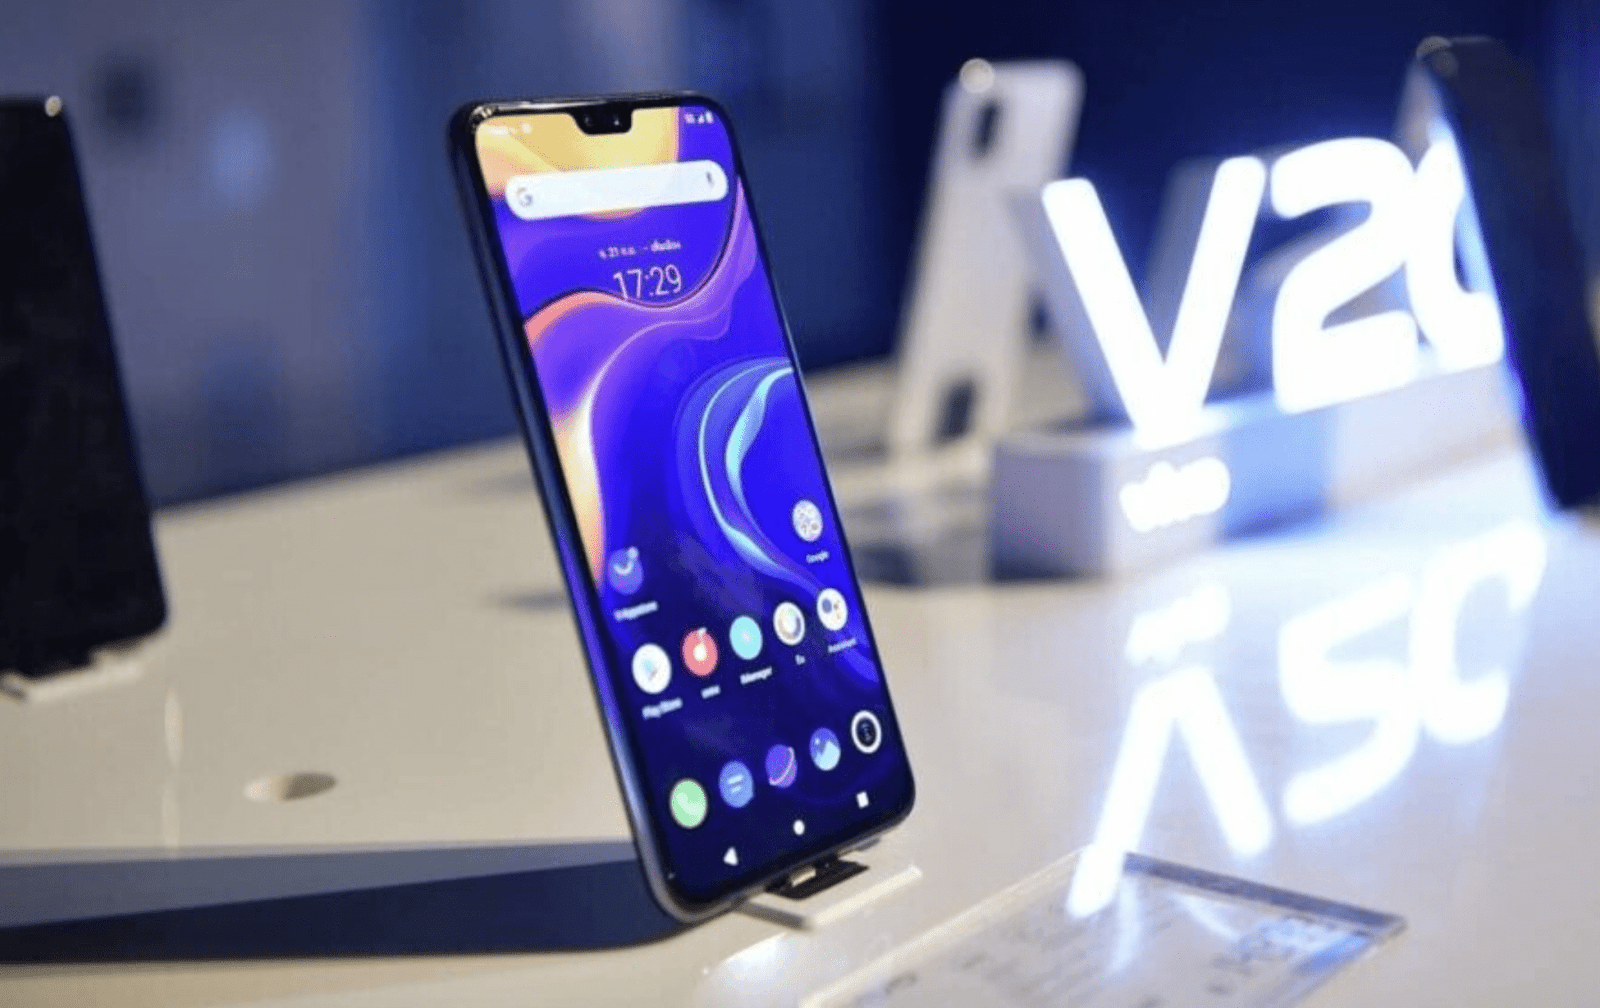 Vivo V20 Pro 5G Smartphone